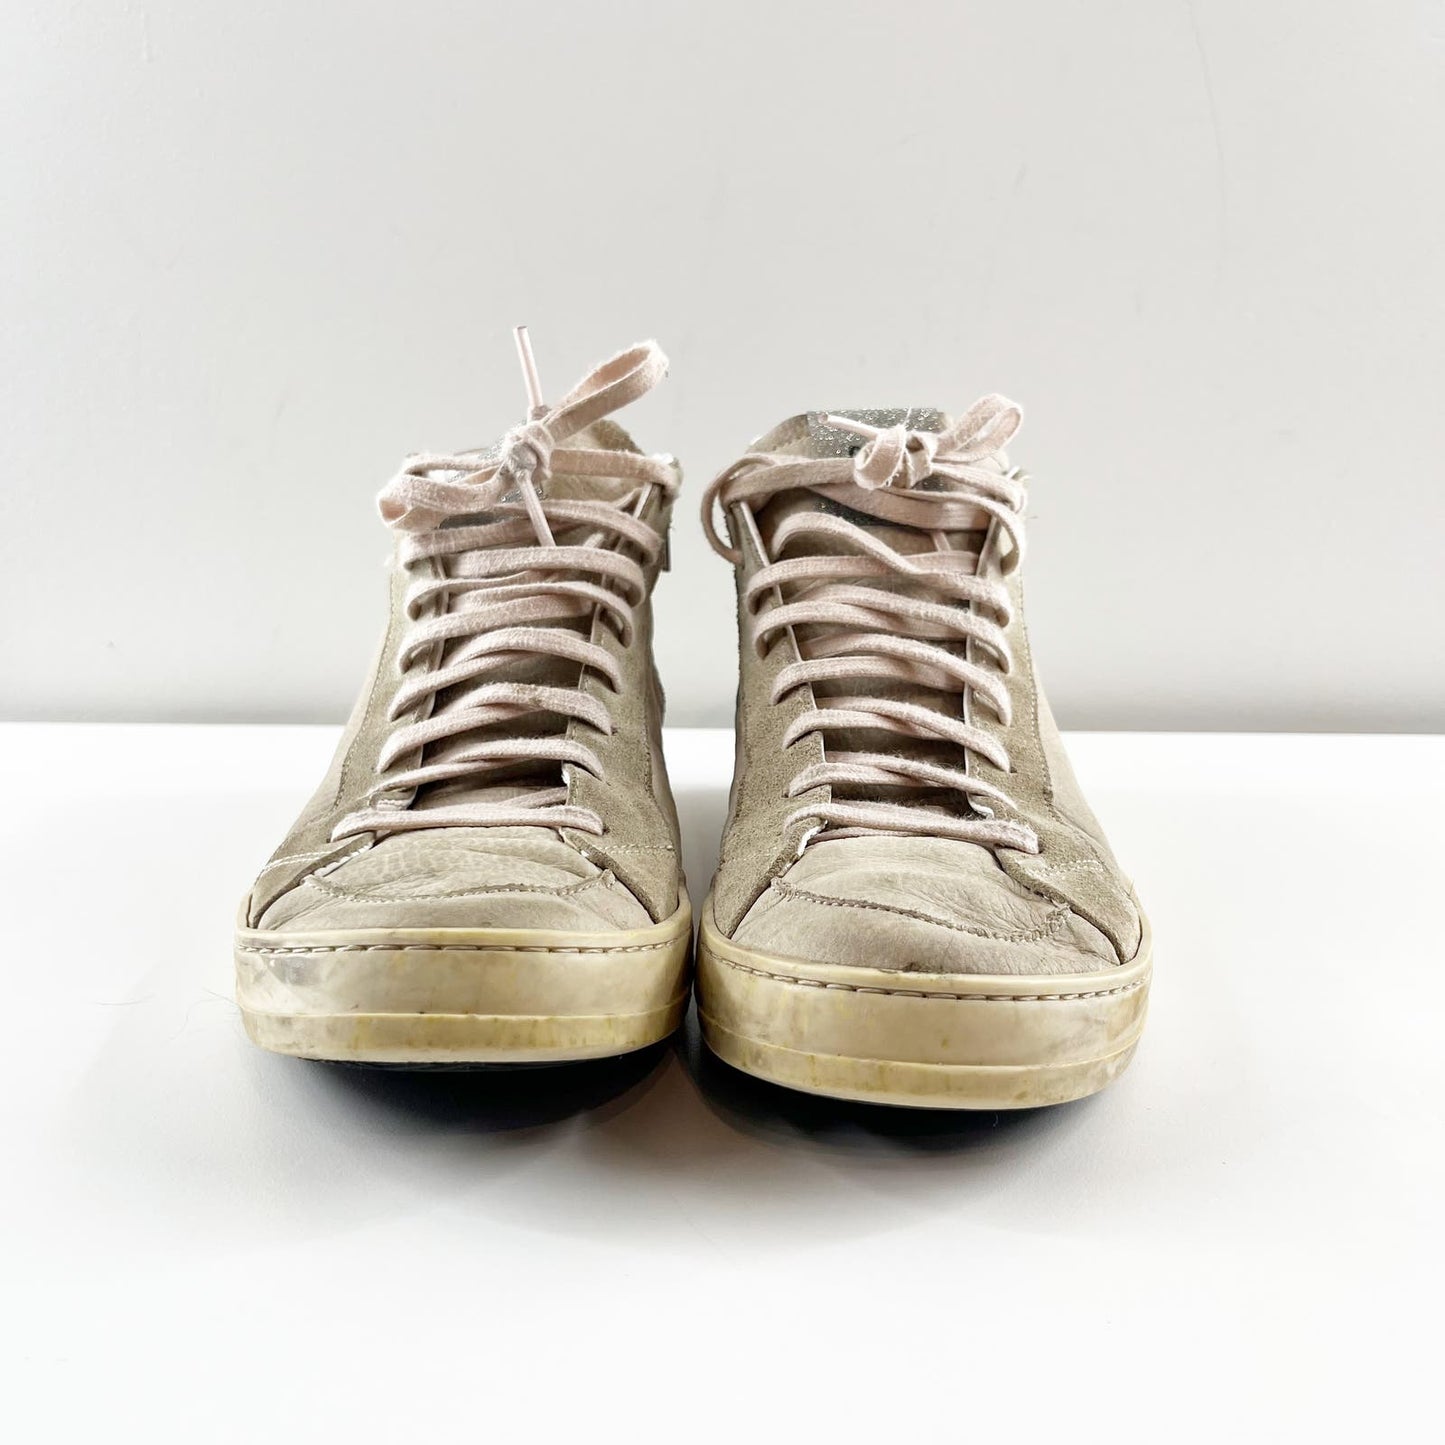 P448 Hightop Skate Sneakers Shoes Gray Cristal 38 / 8